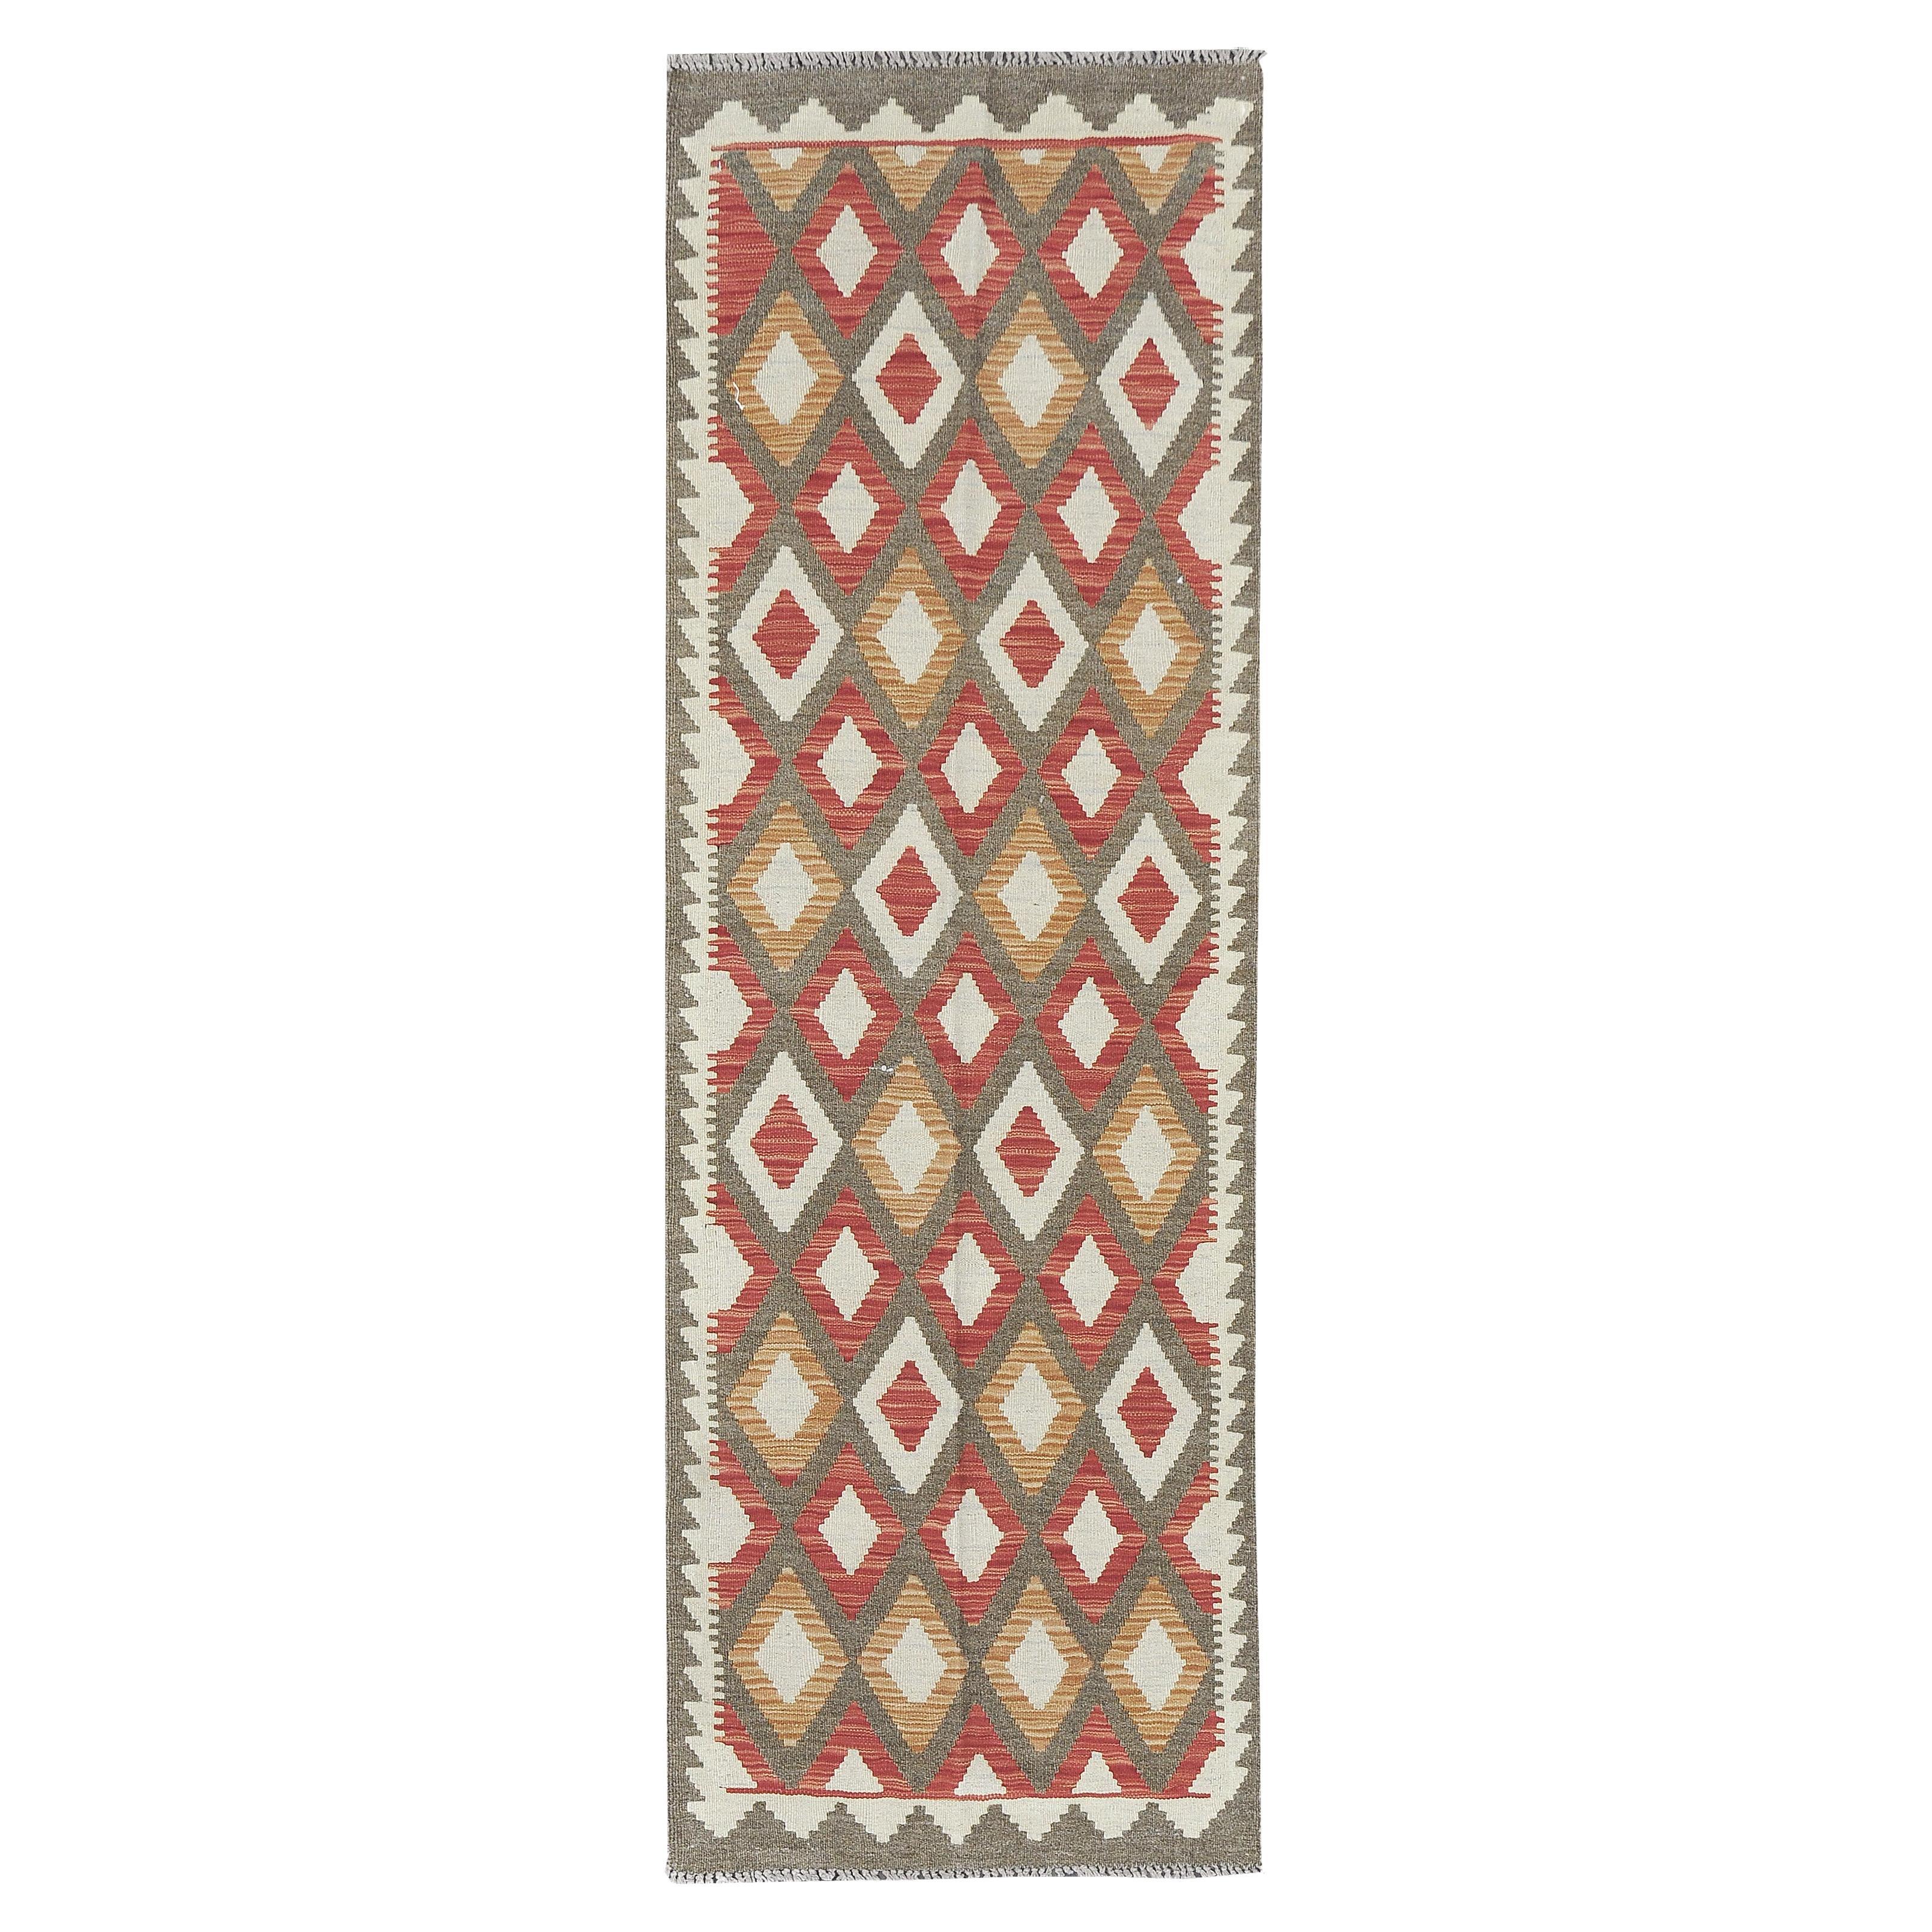 Vintage Style Tribal Natural Dye Flat Weave Kilim